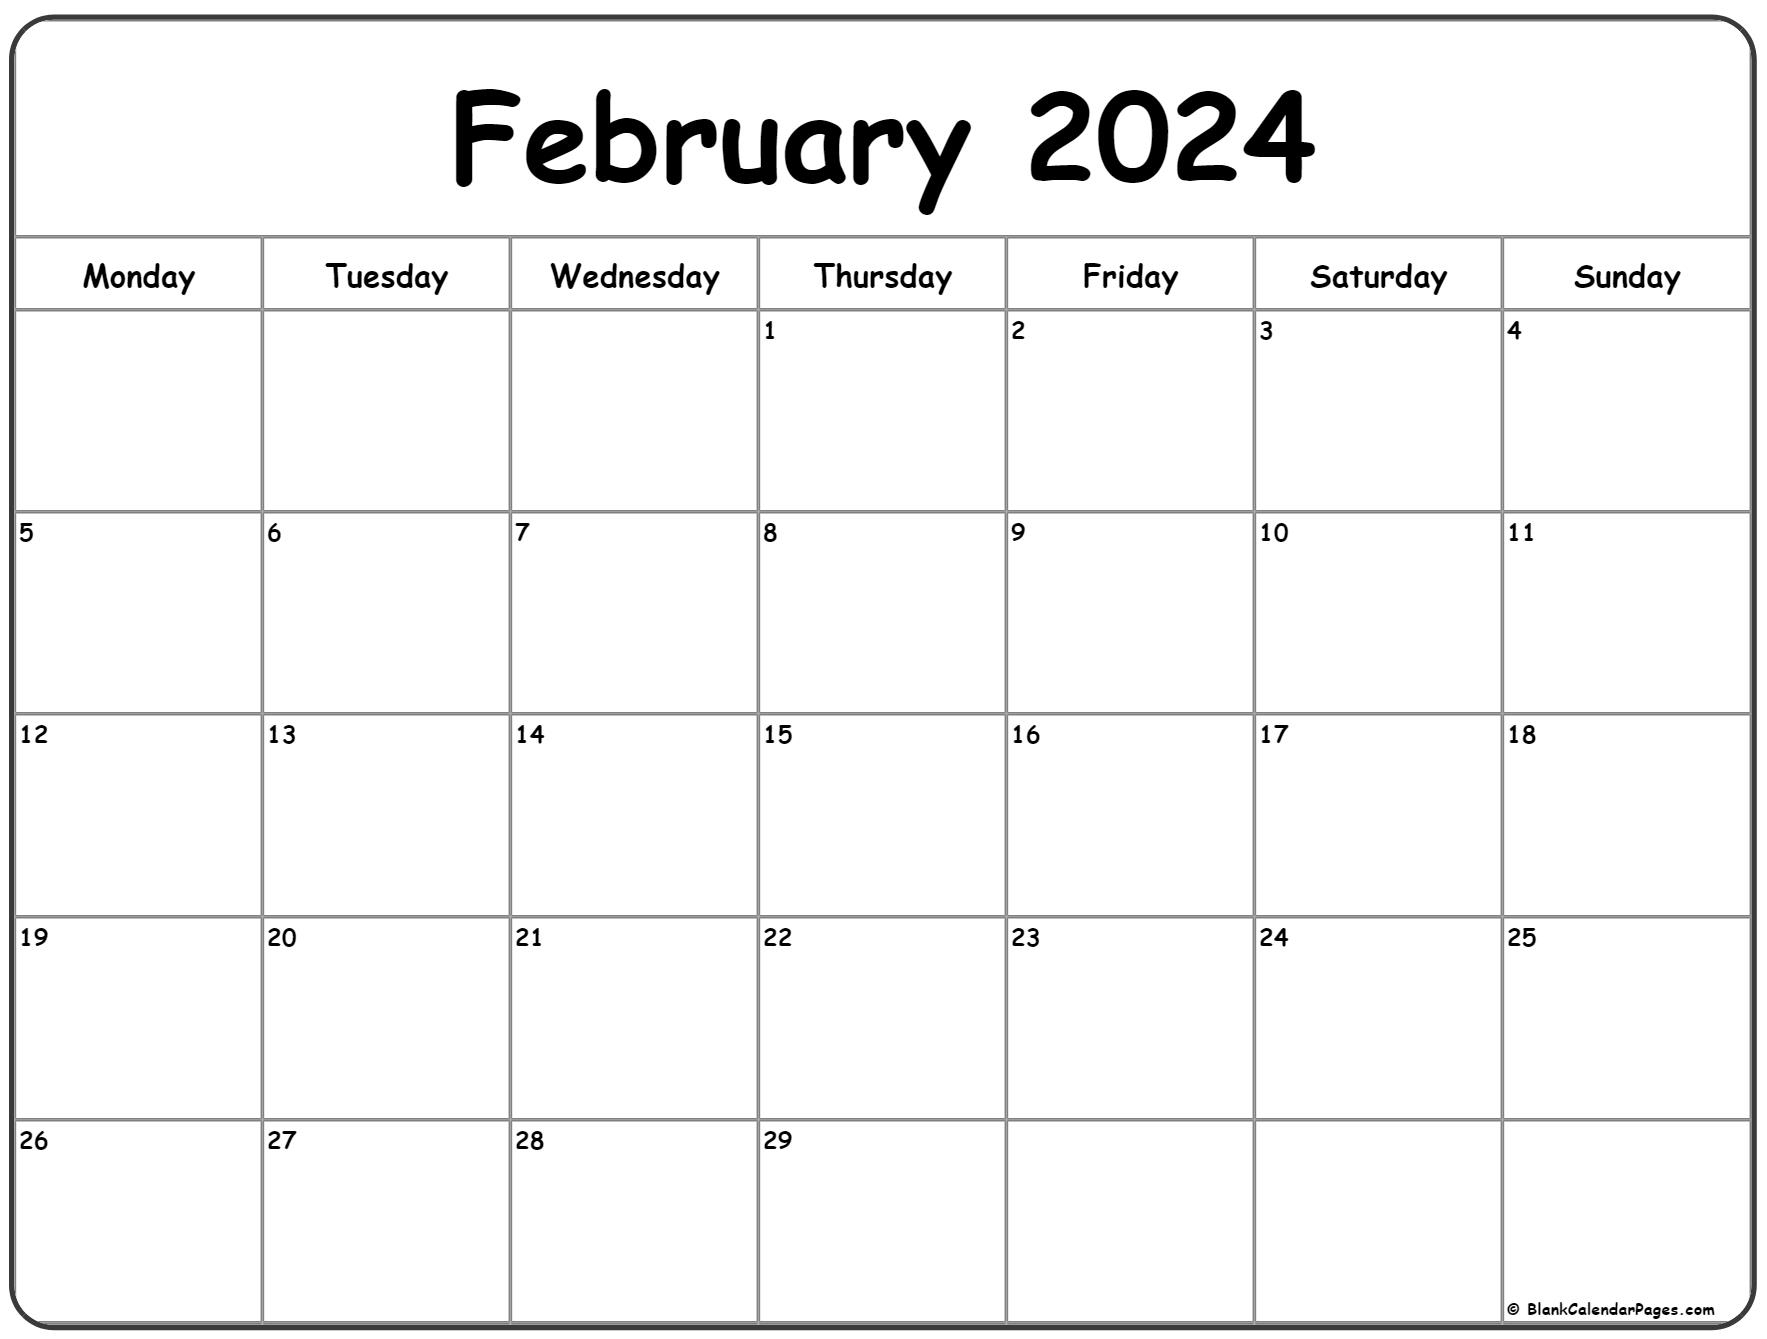 February 2024 Monday Calendar | Monday To Sunday for Printable Calendar Of February 2024